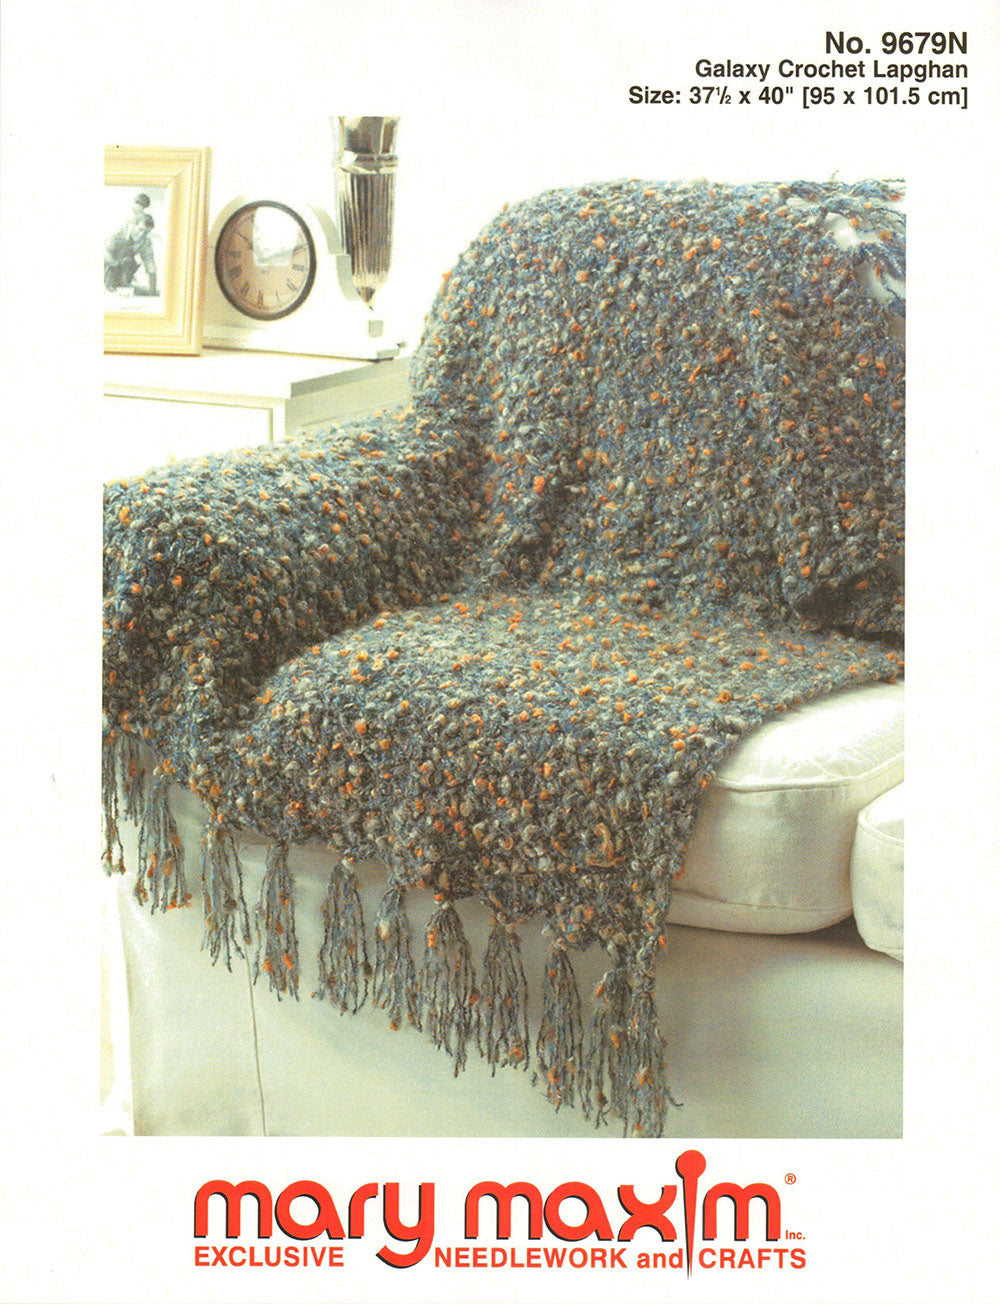 Galaxy Crochet Lapghan